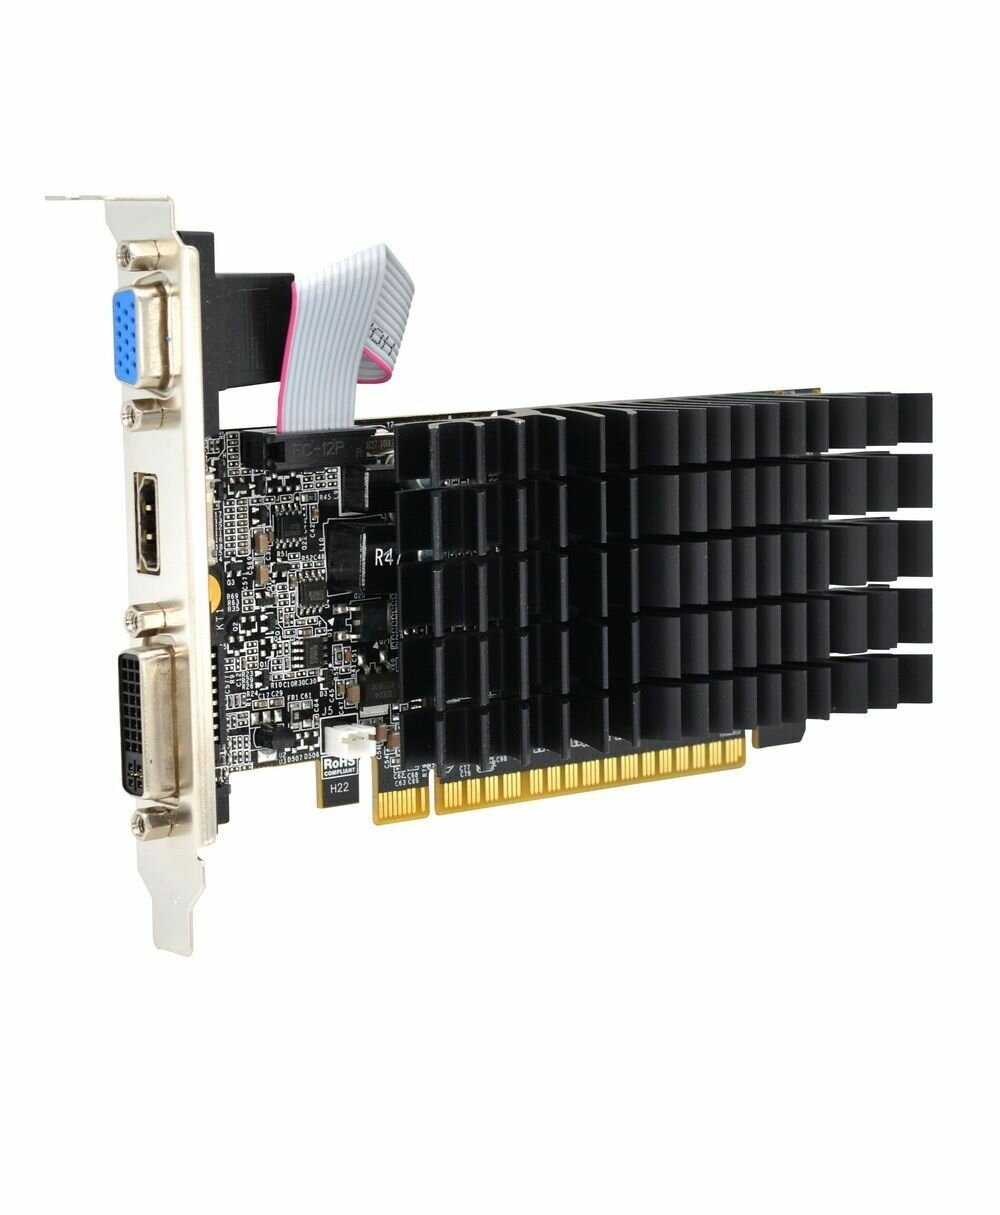 Видеокарта Afox Geforce G210 450Mhz PCI-E 1024Mb 1040Mhz 64 bit VGA DVI HDMI AF210-1024D3L5-V2